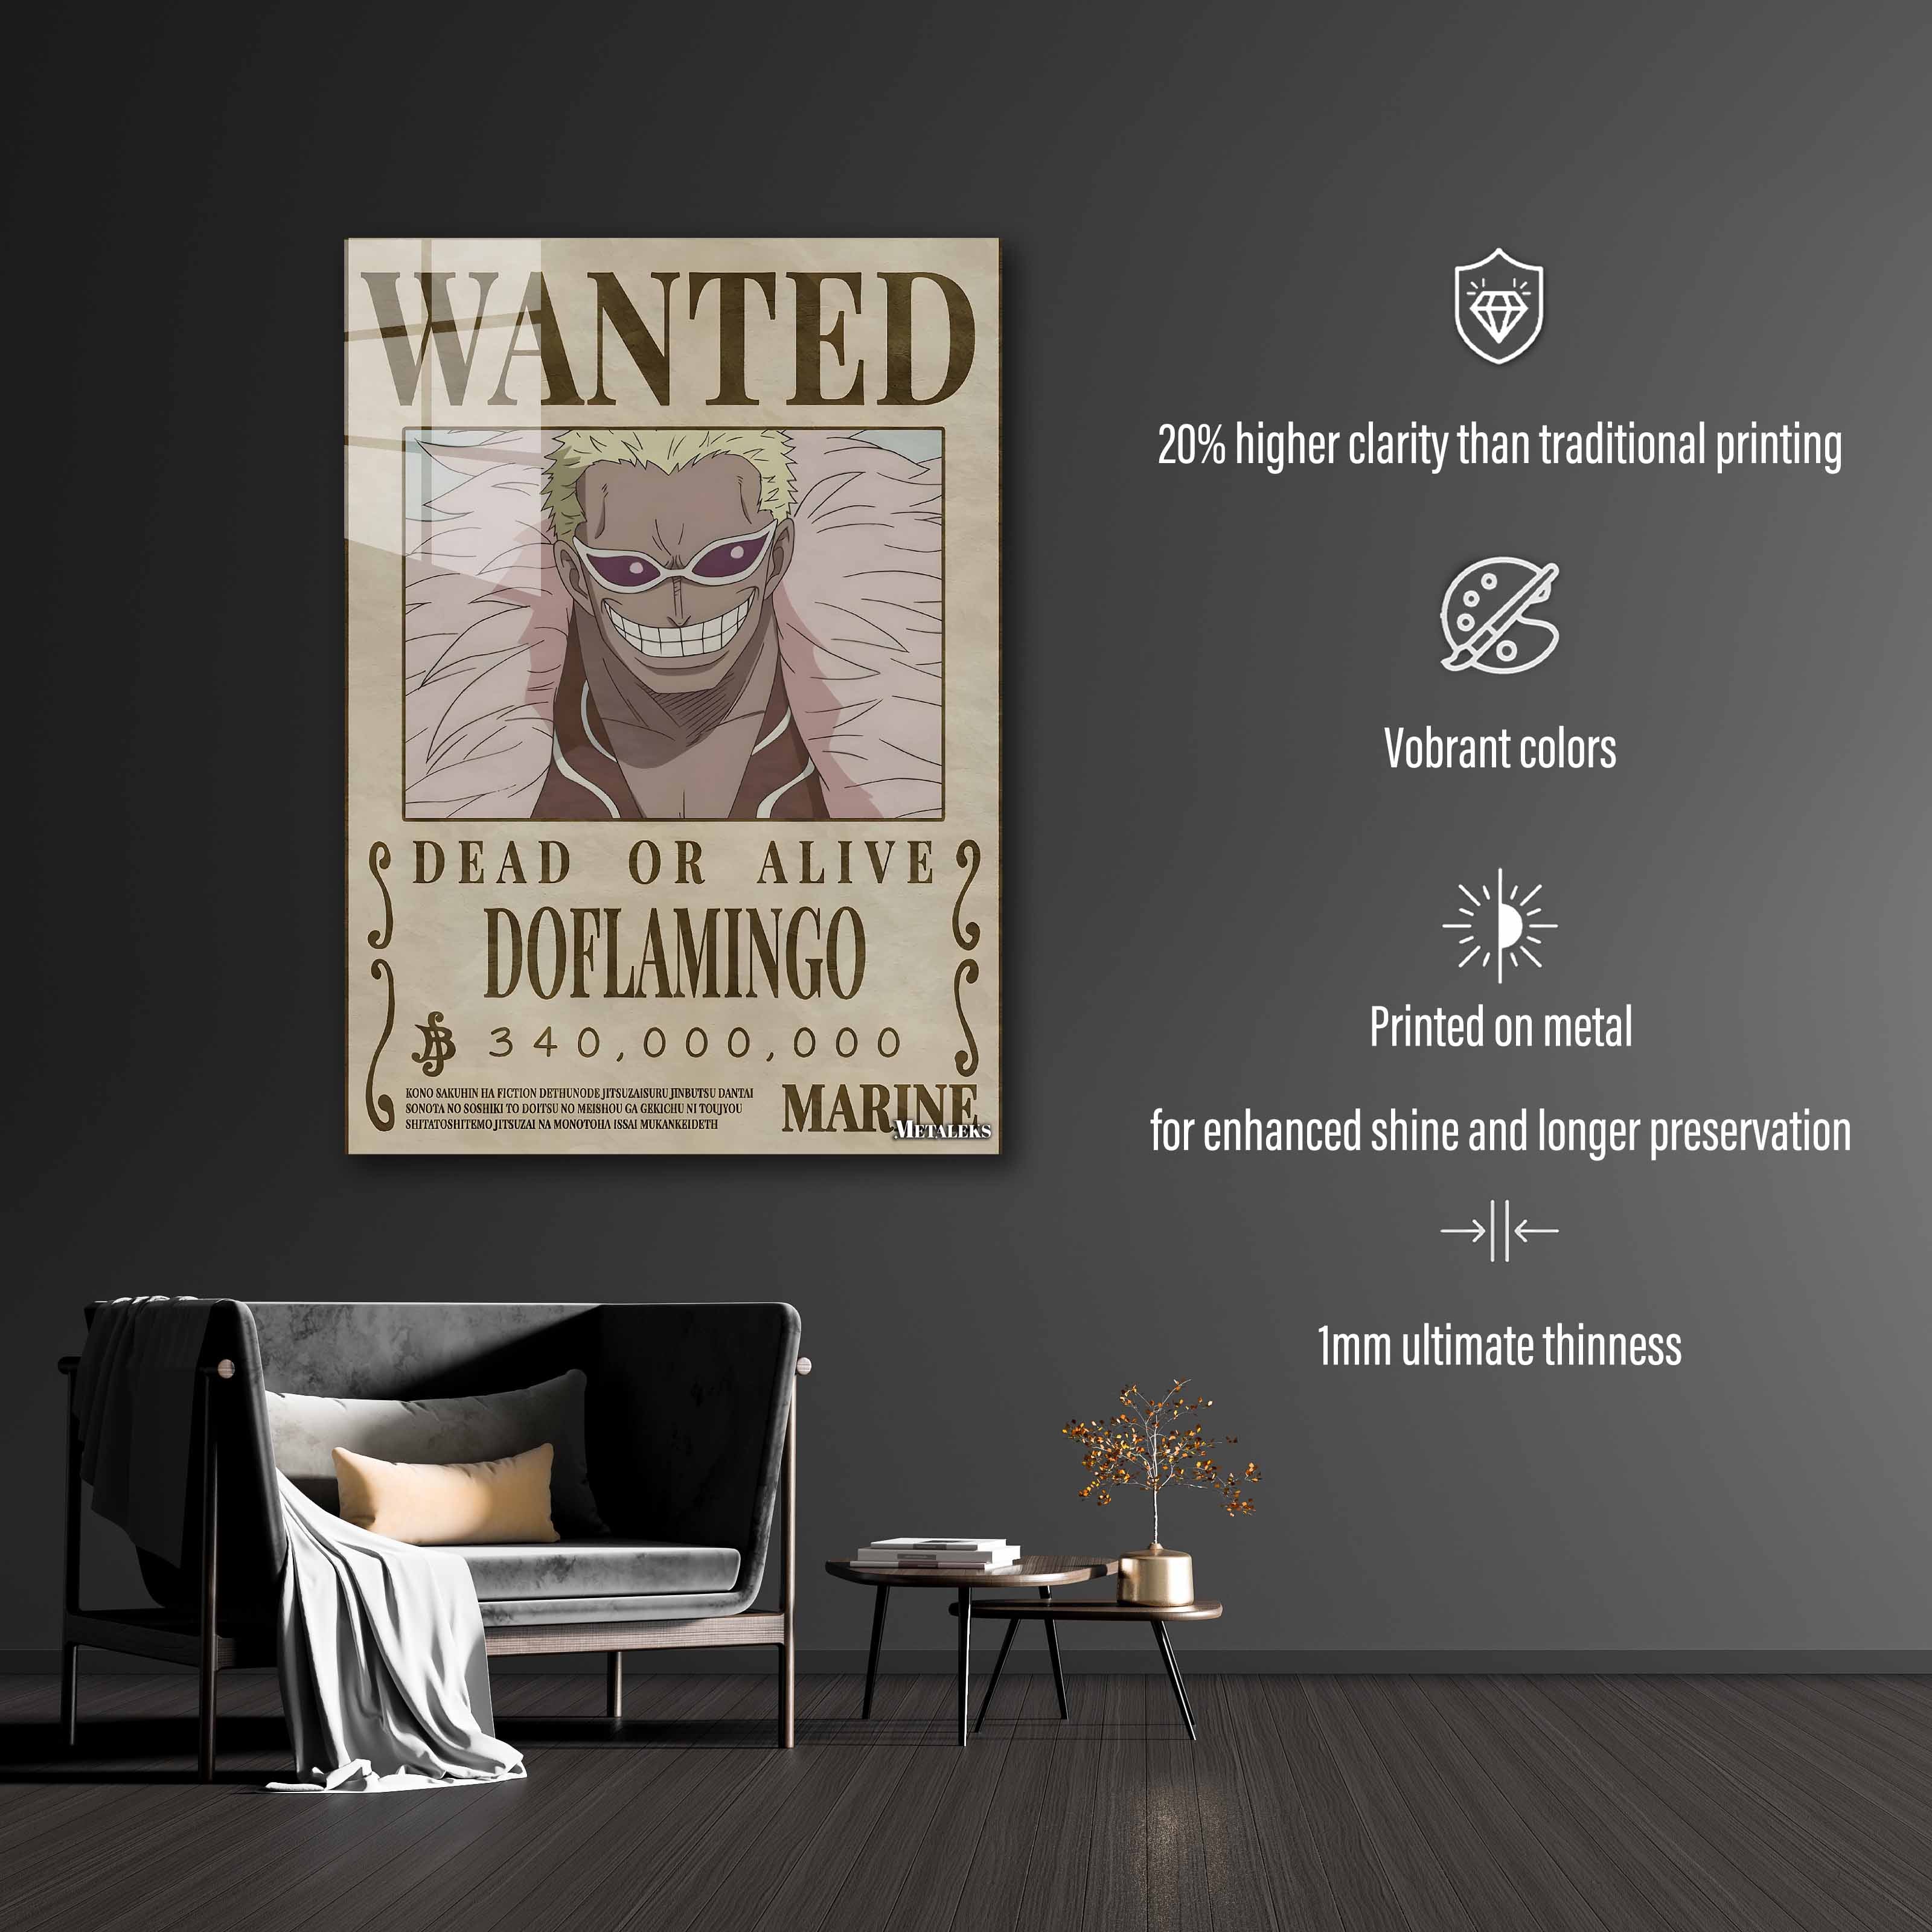 Wanted Doflamingo-designed by @Genio Art